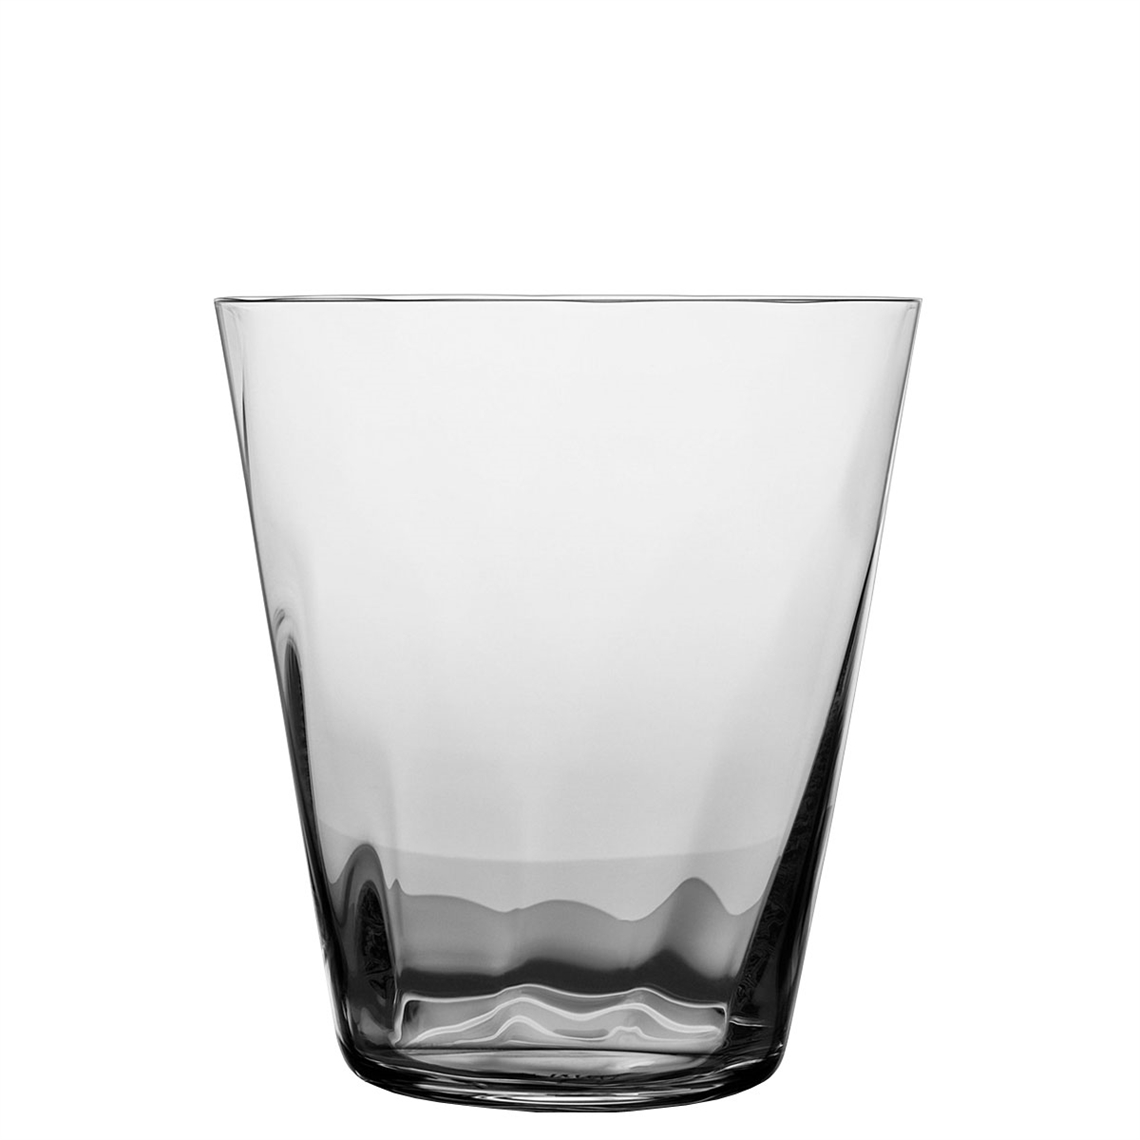 Zalto Denk Art Stemless Coupe Effect Water Glass - Set of 6